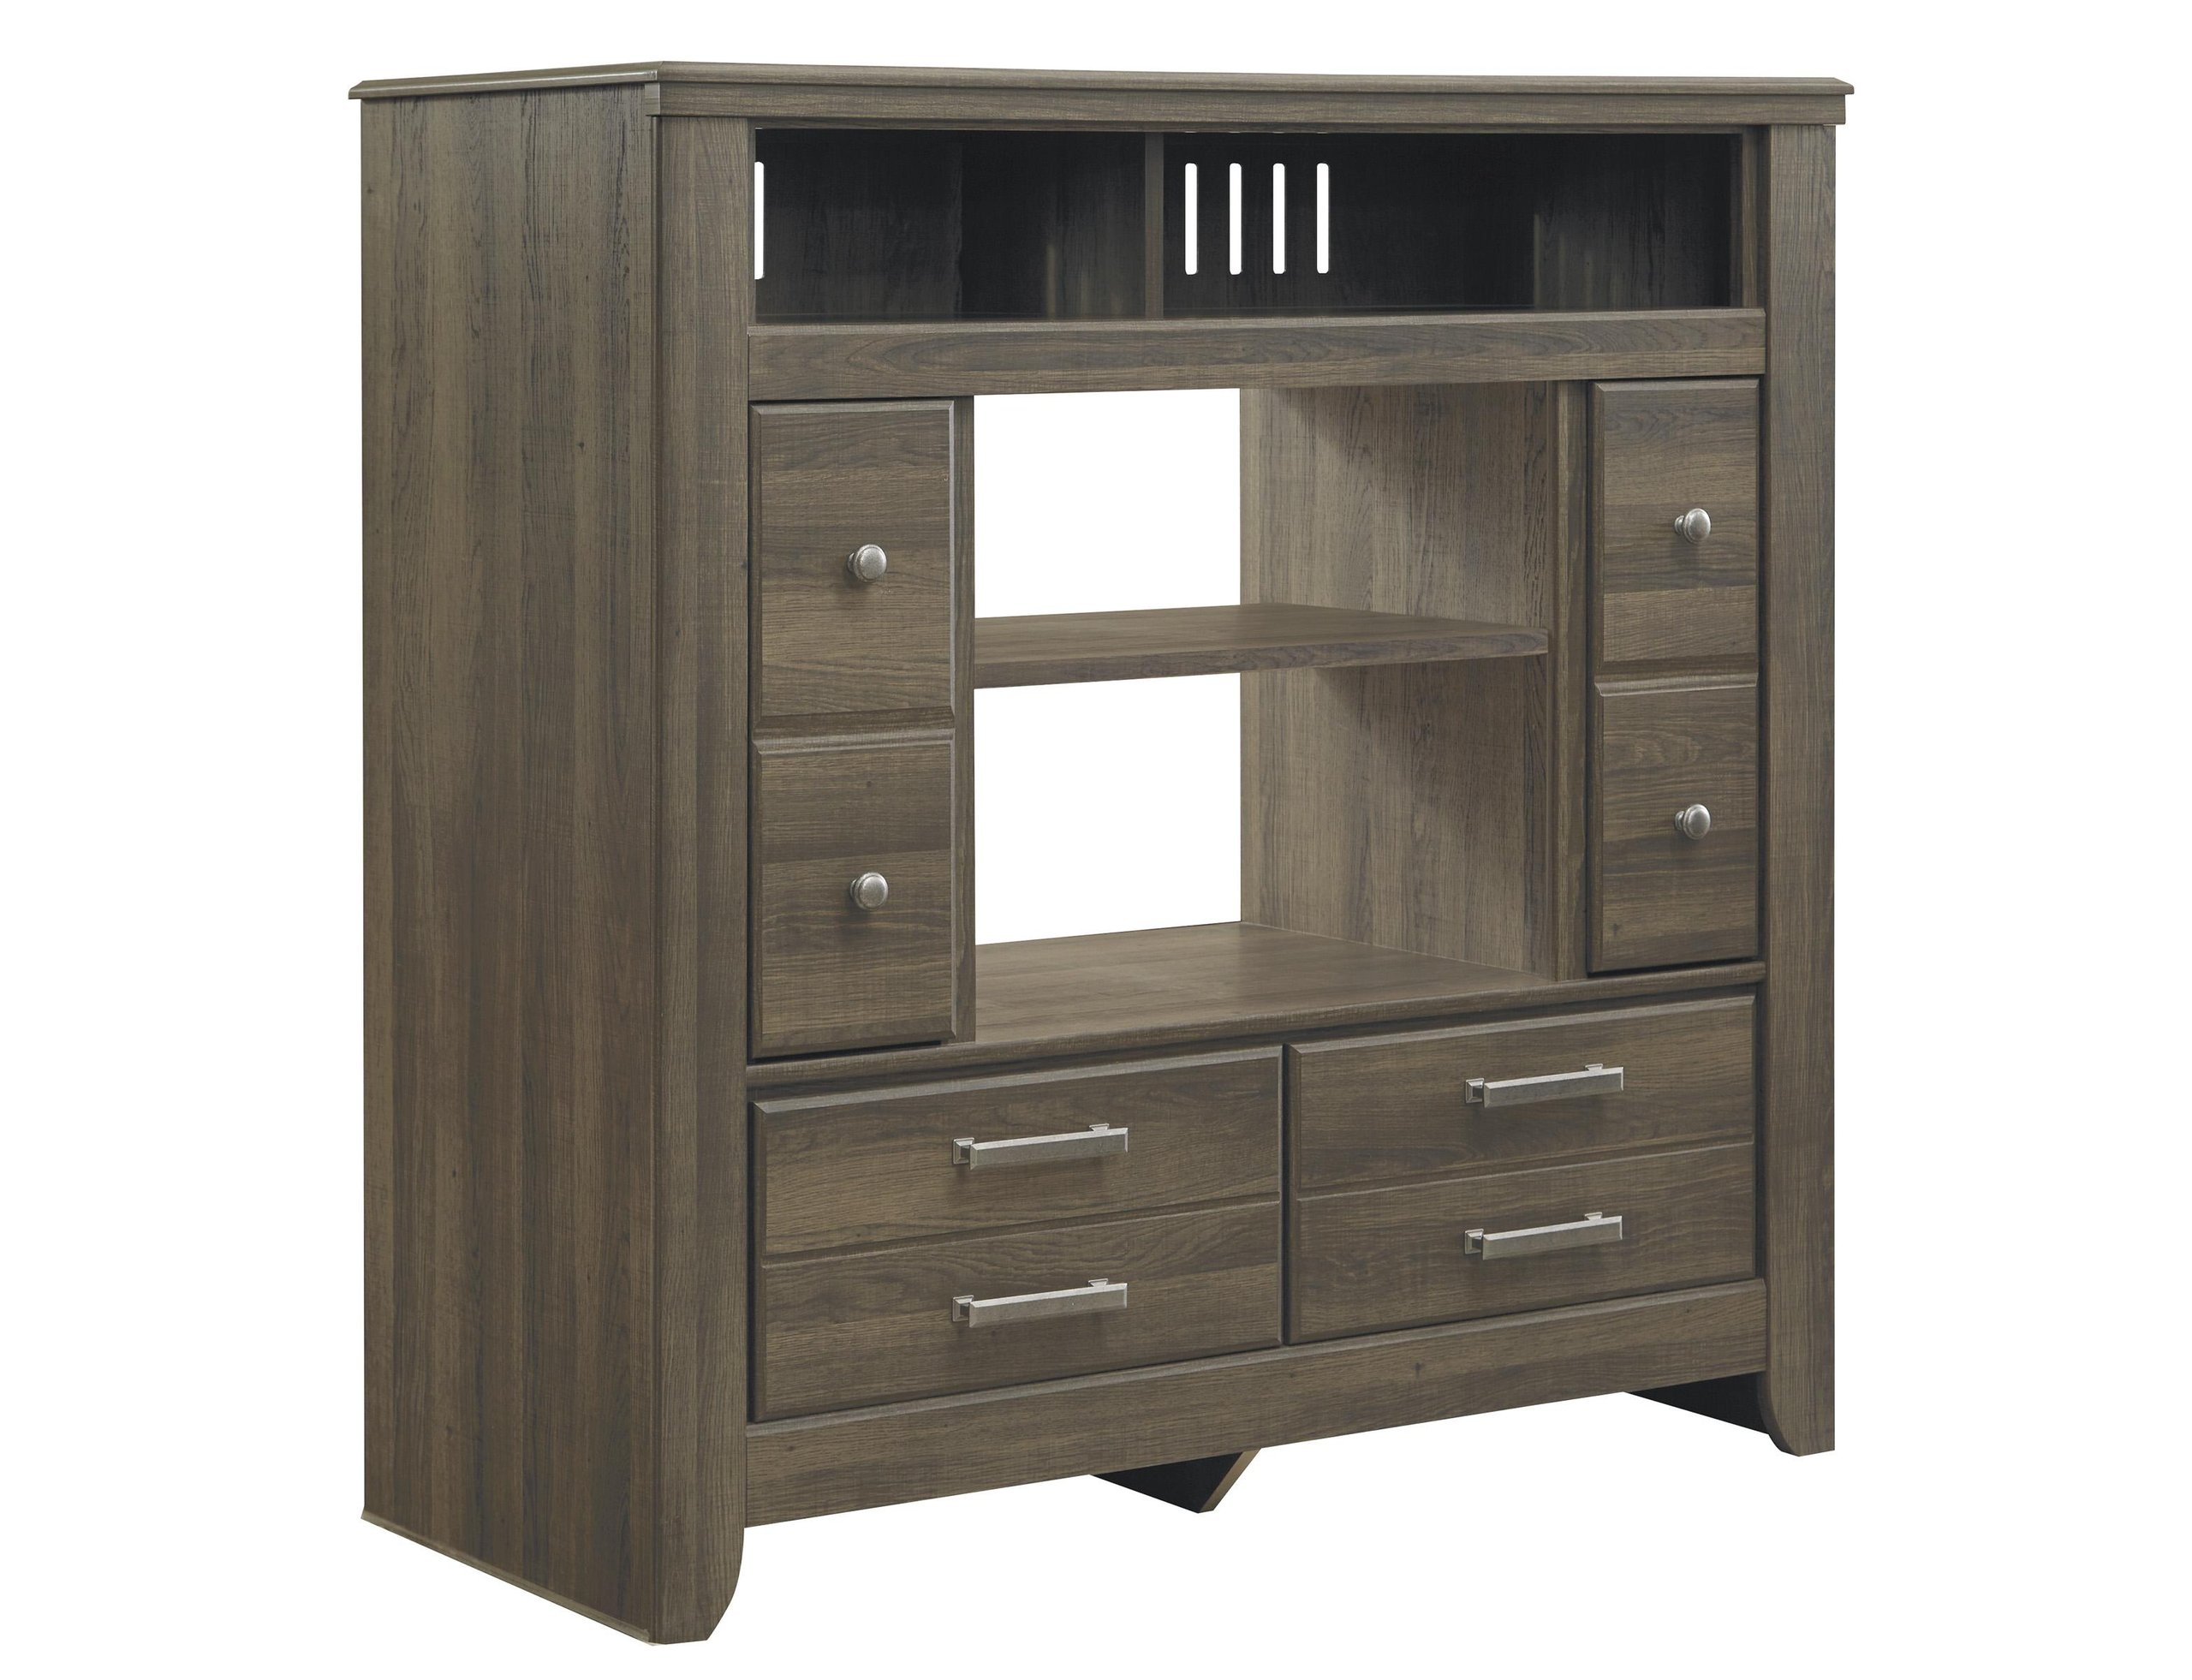 Ashley Juararo B251 Queen Size Panel Bedroom Set 6pcs In Dark Brown Buy Online On Ny Furniture 8406